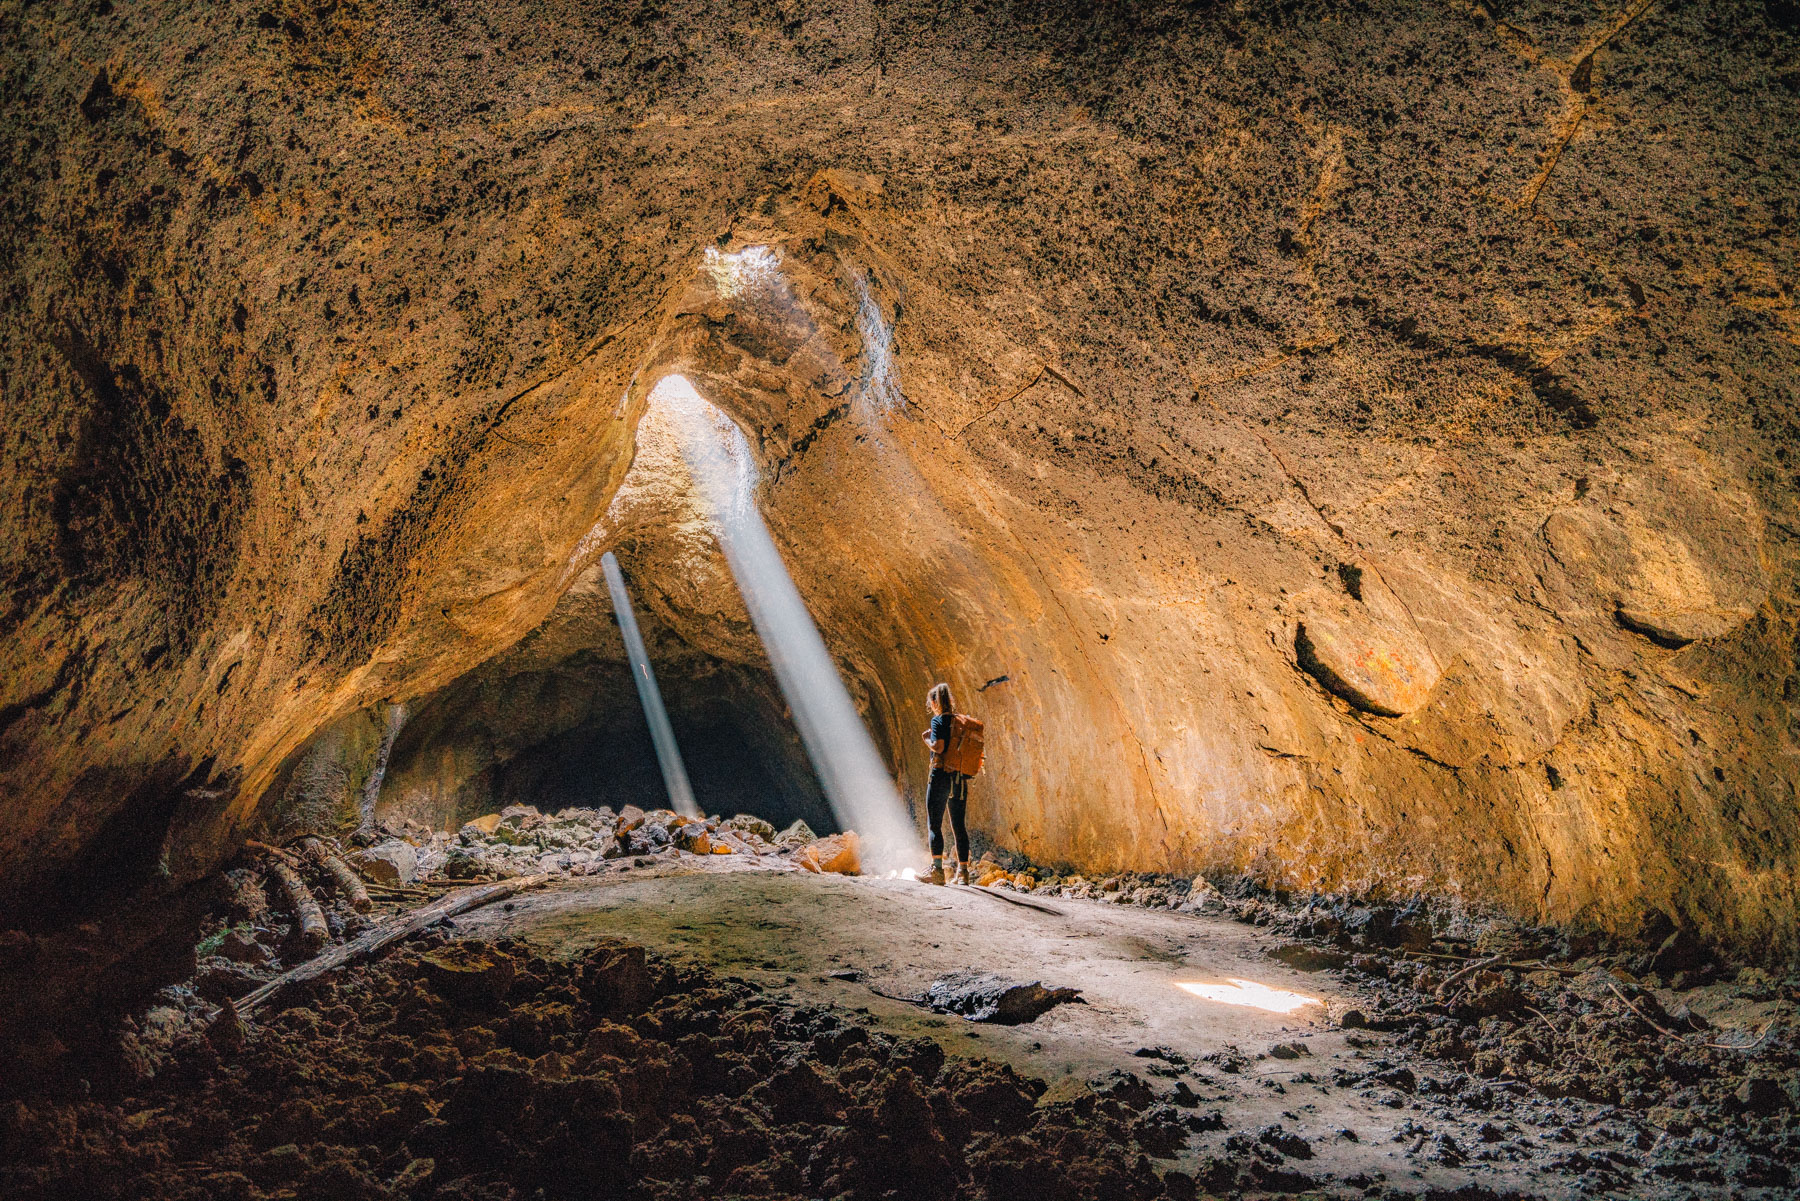 best caves Oregon
Oregon best caves
